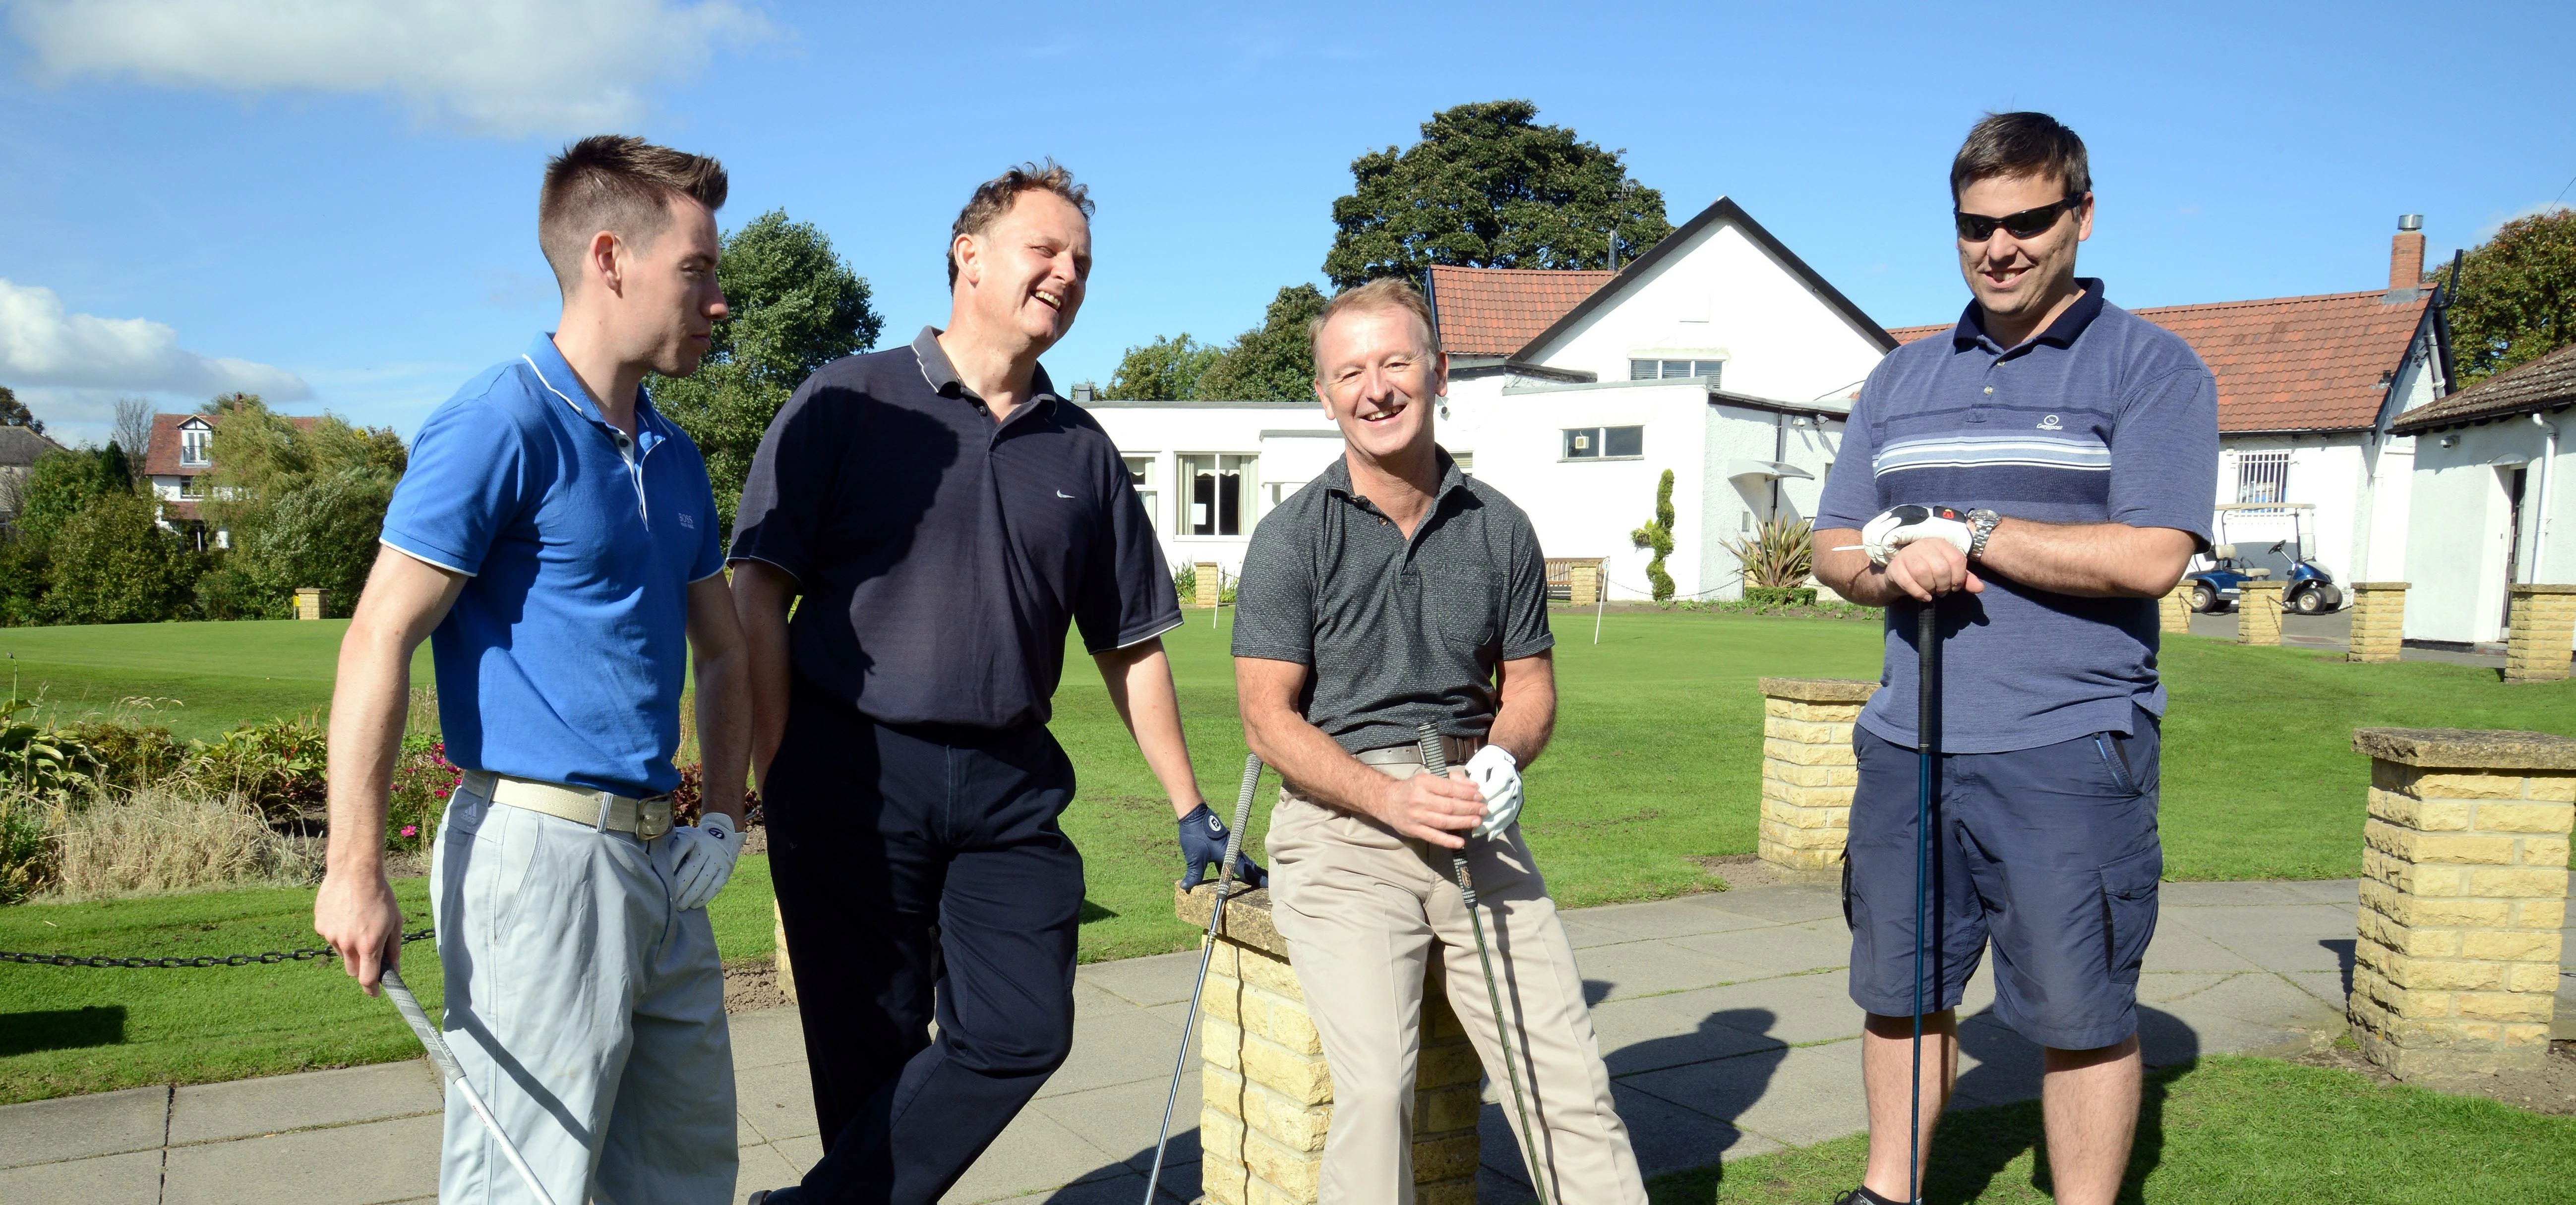 Staff at Barratt Developments at the charity golf day